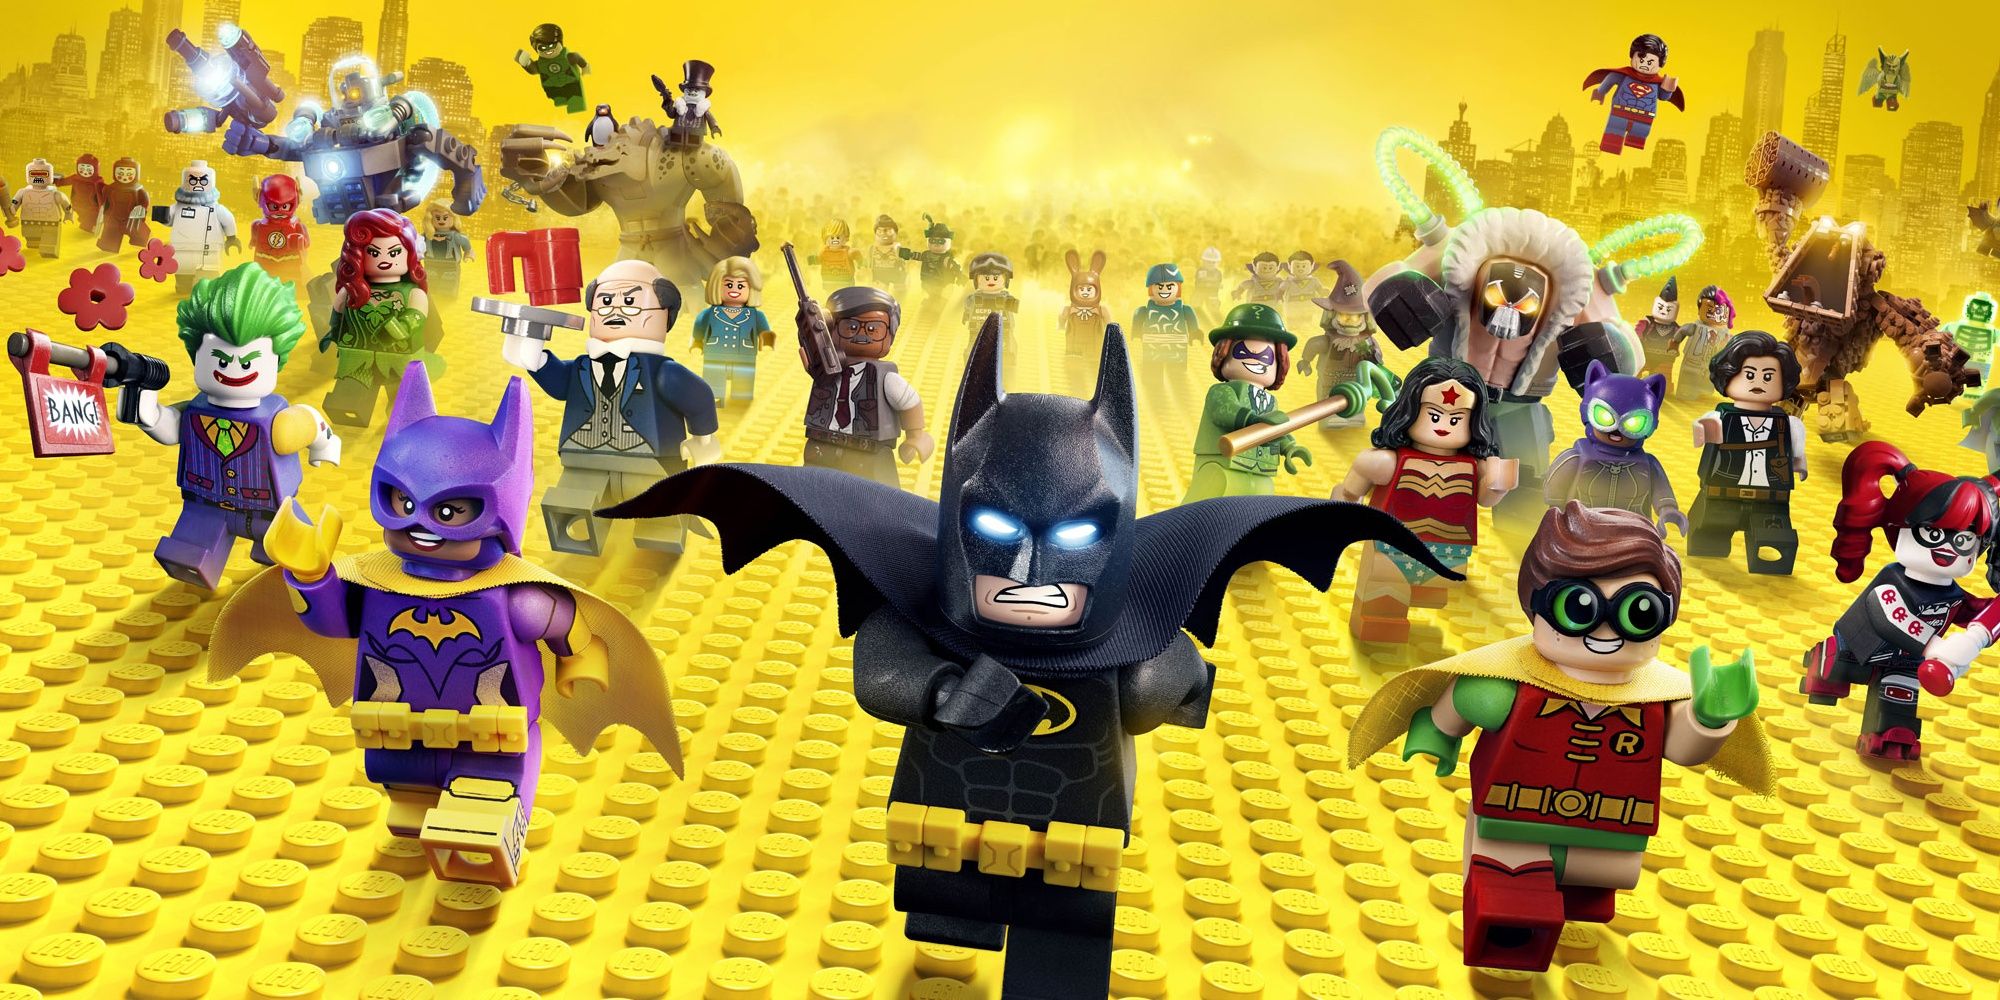 Lego Batman Movie promo art featuring the Batfamily and villains